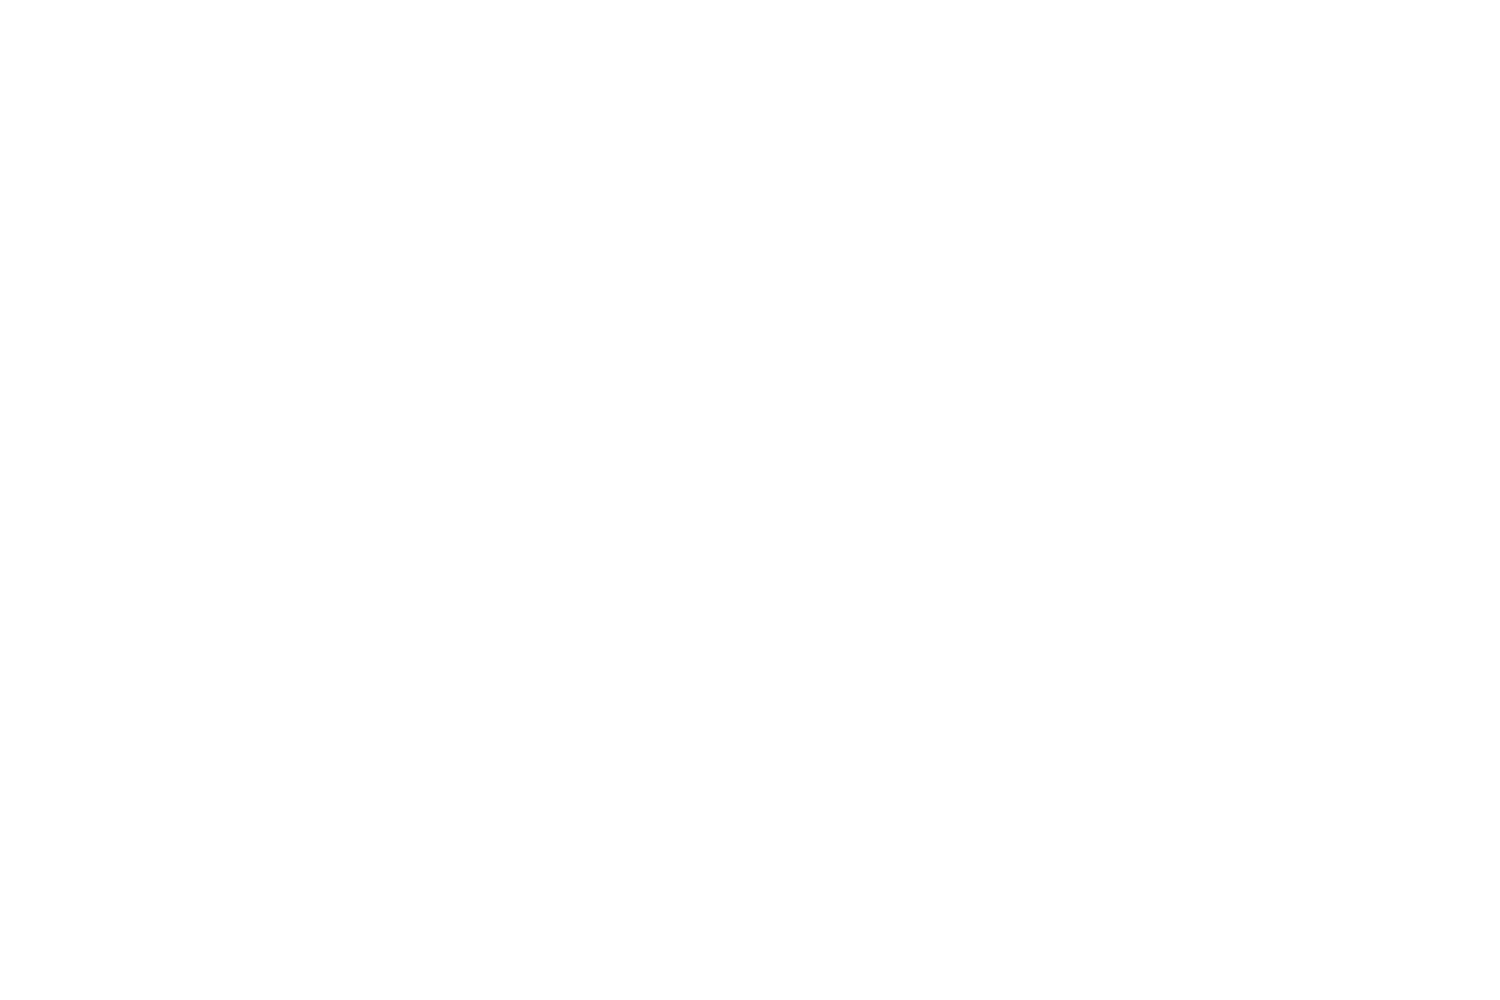 Gorney Realty Co. LLC.